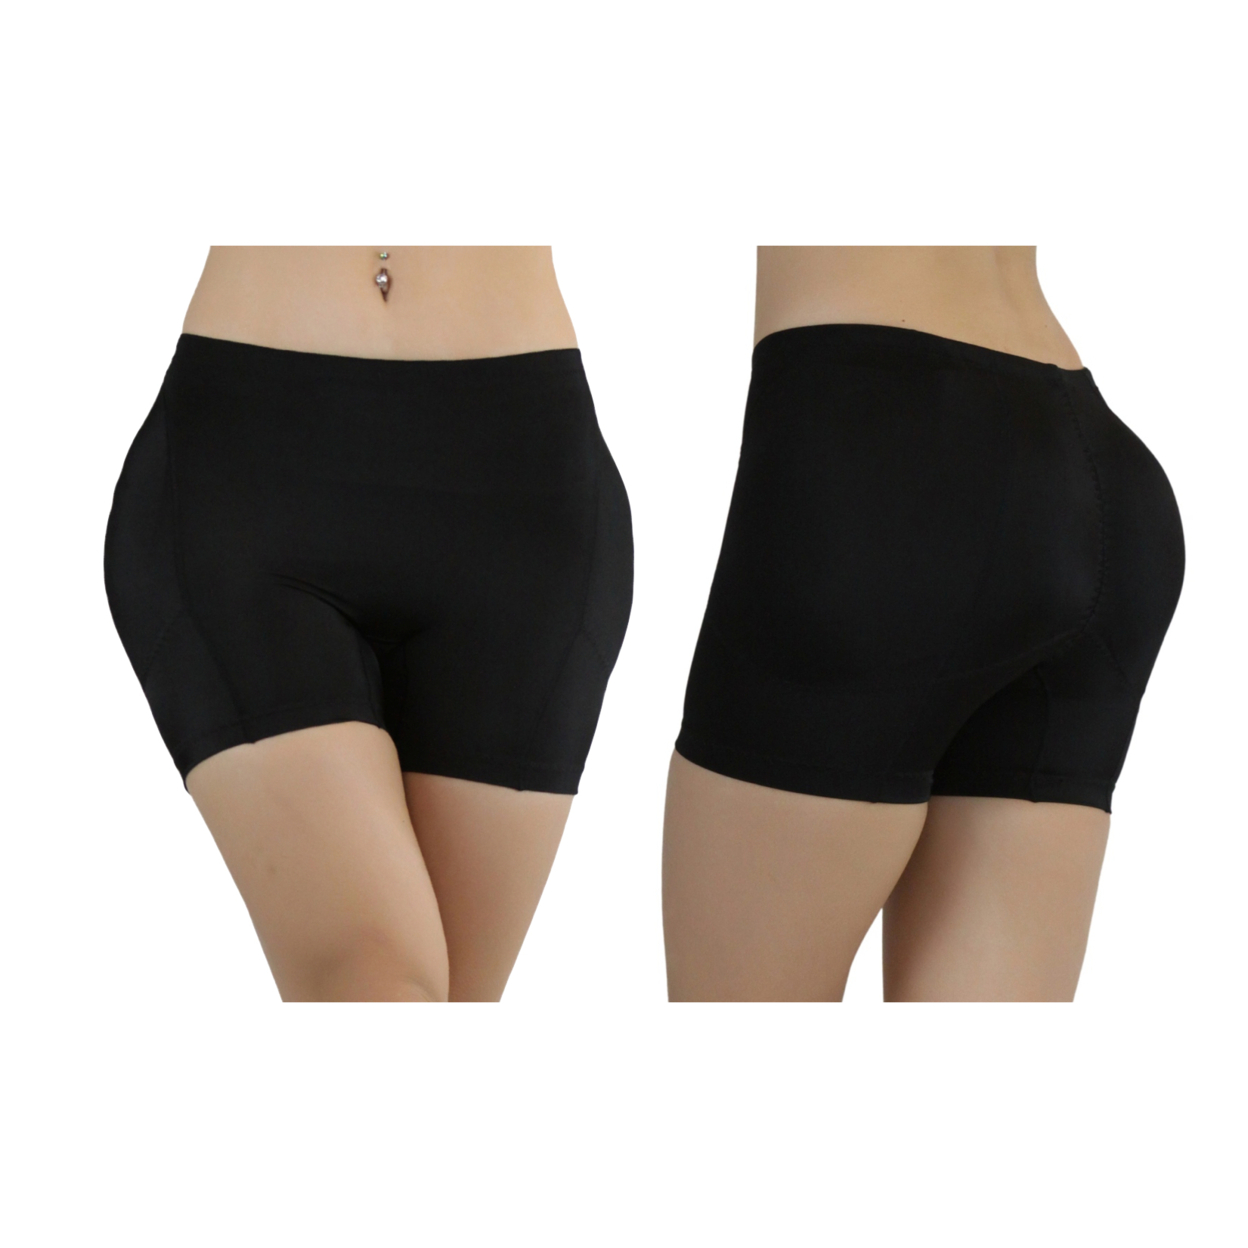 Women's Butt And Hip Padded Shaper - Black, L